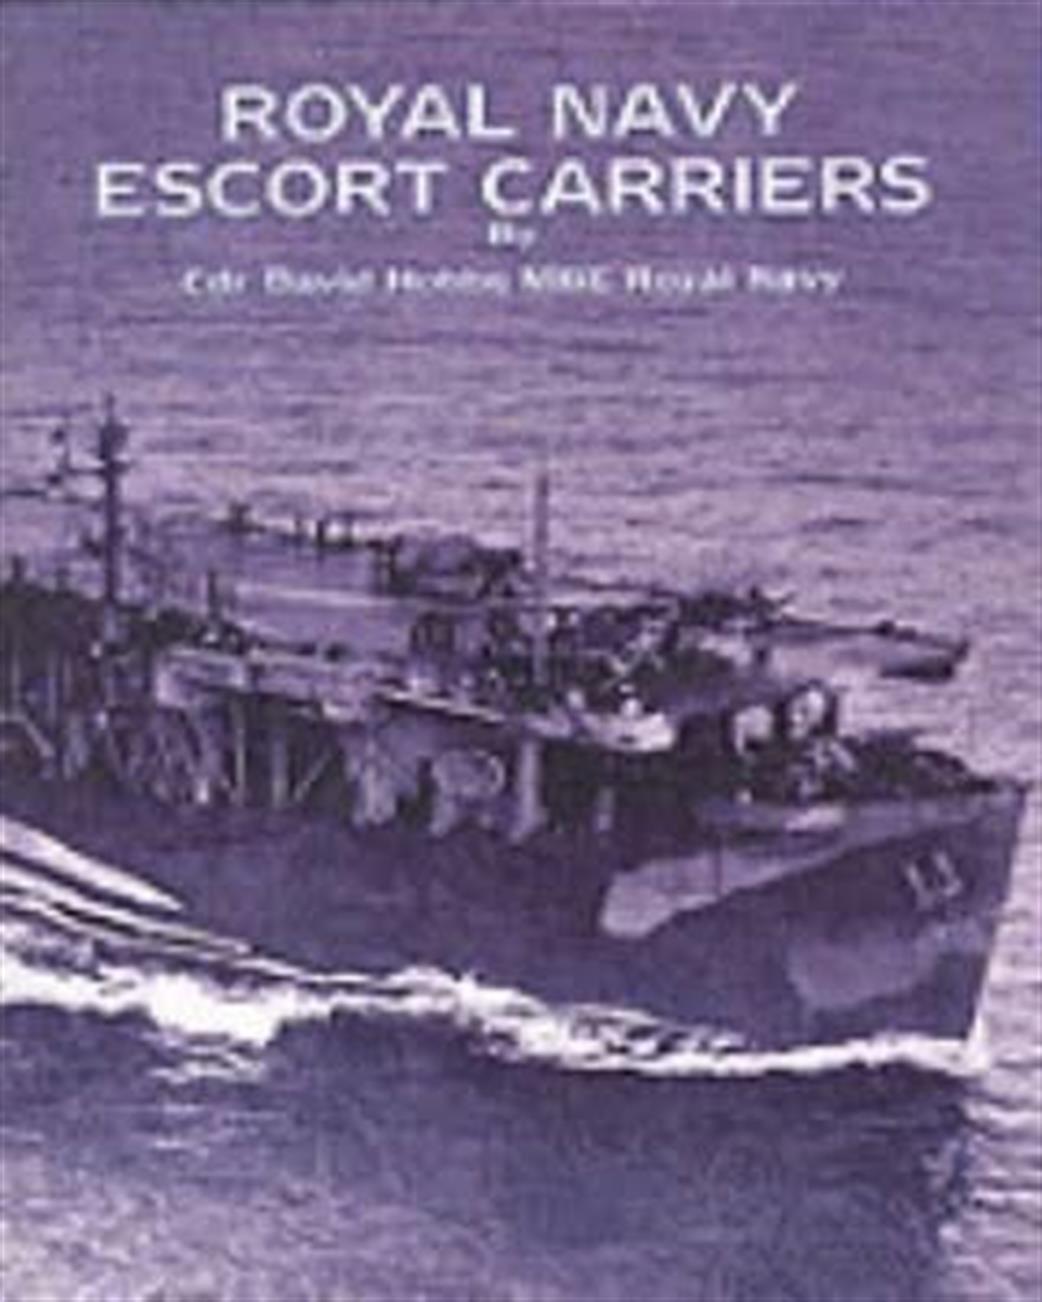 Maritime Books  0907771998 Royal Navy Escort Carriers